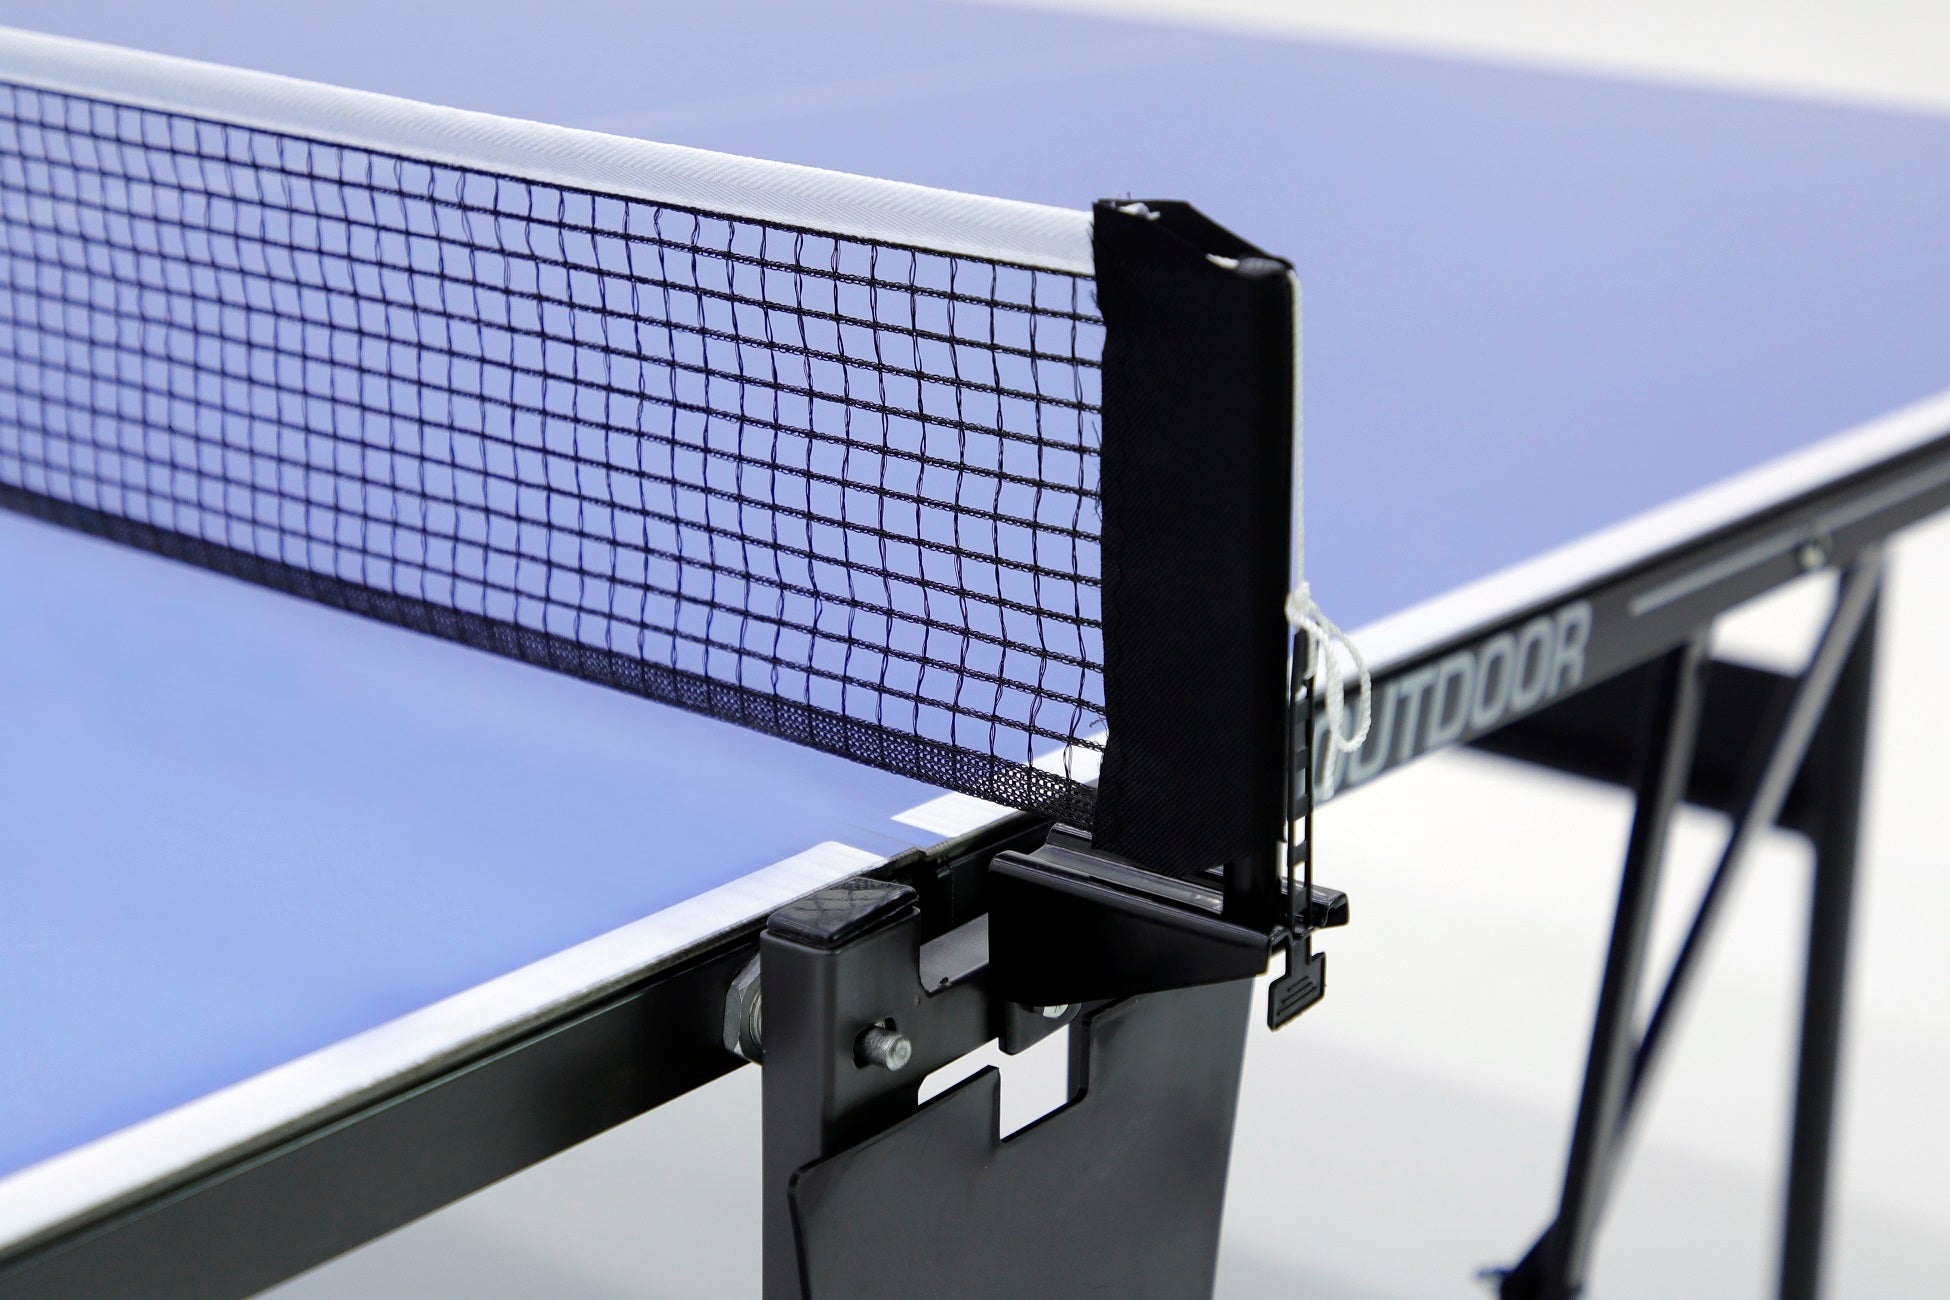 Weatherproof Atlantic Professional Table Tennis Table